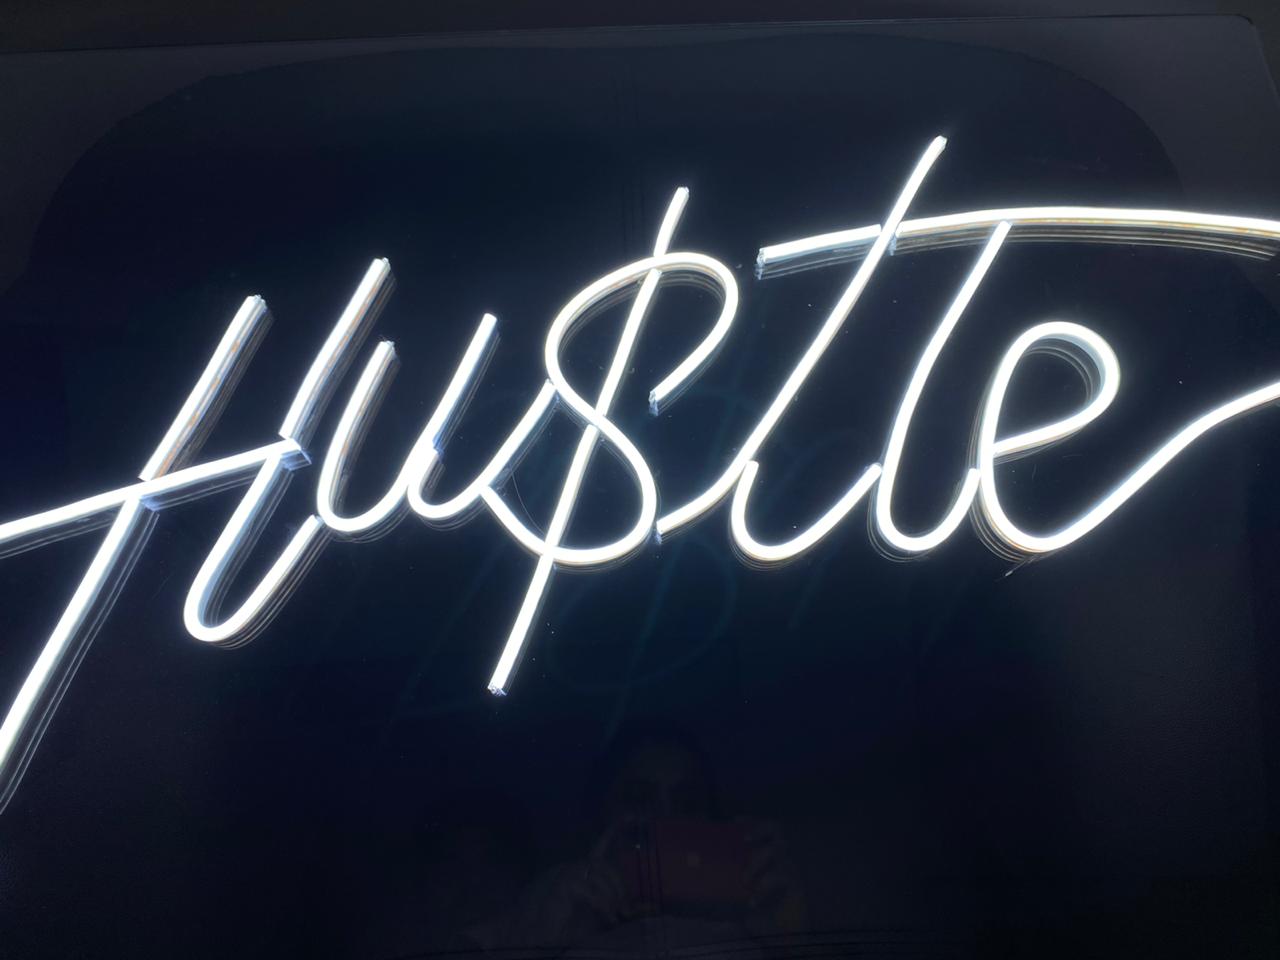 Hustle v2 Neon Sign